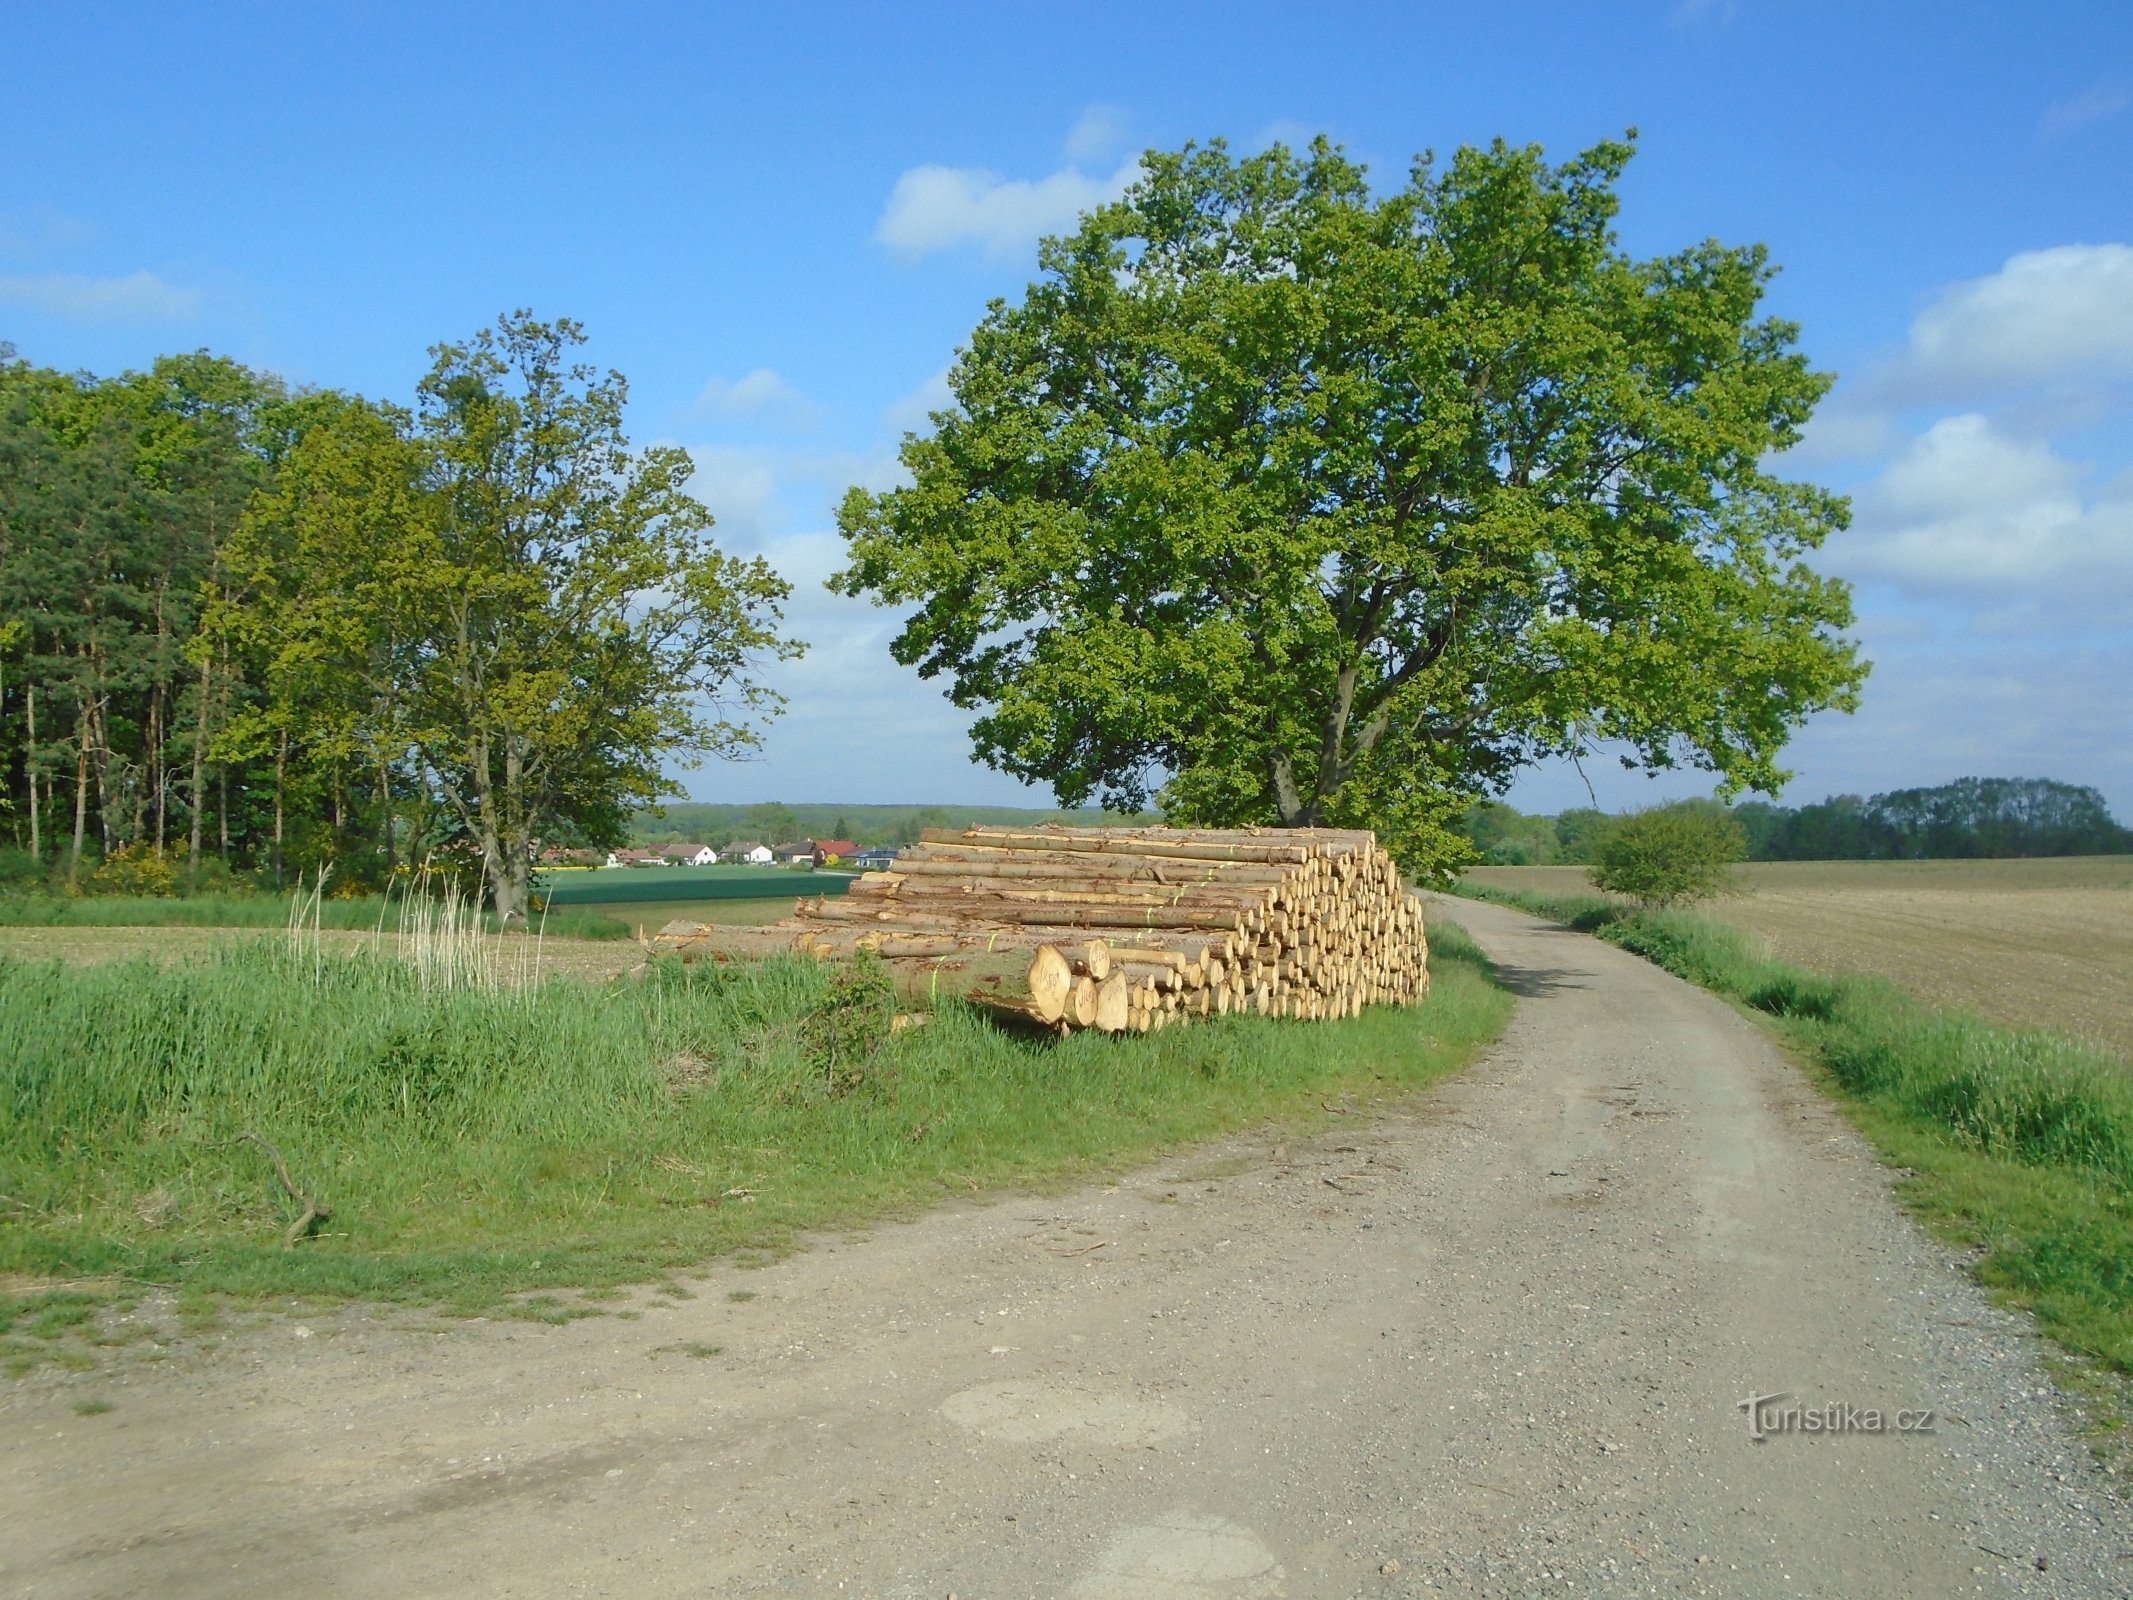 De weg van Radostov naar Kunčice